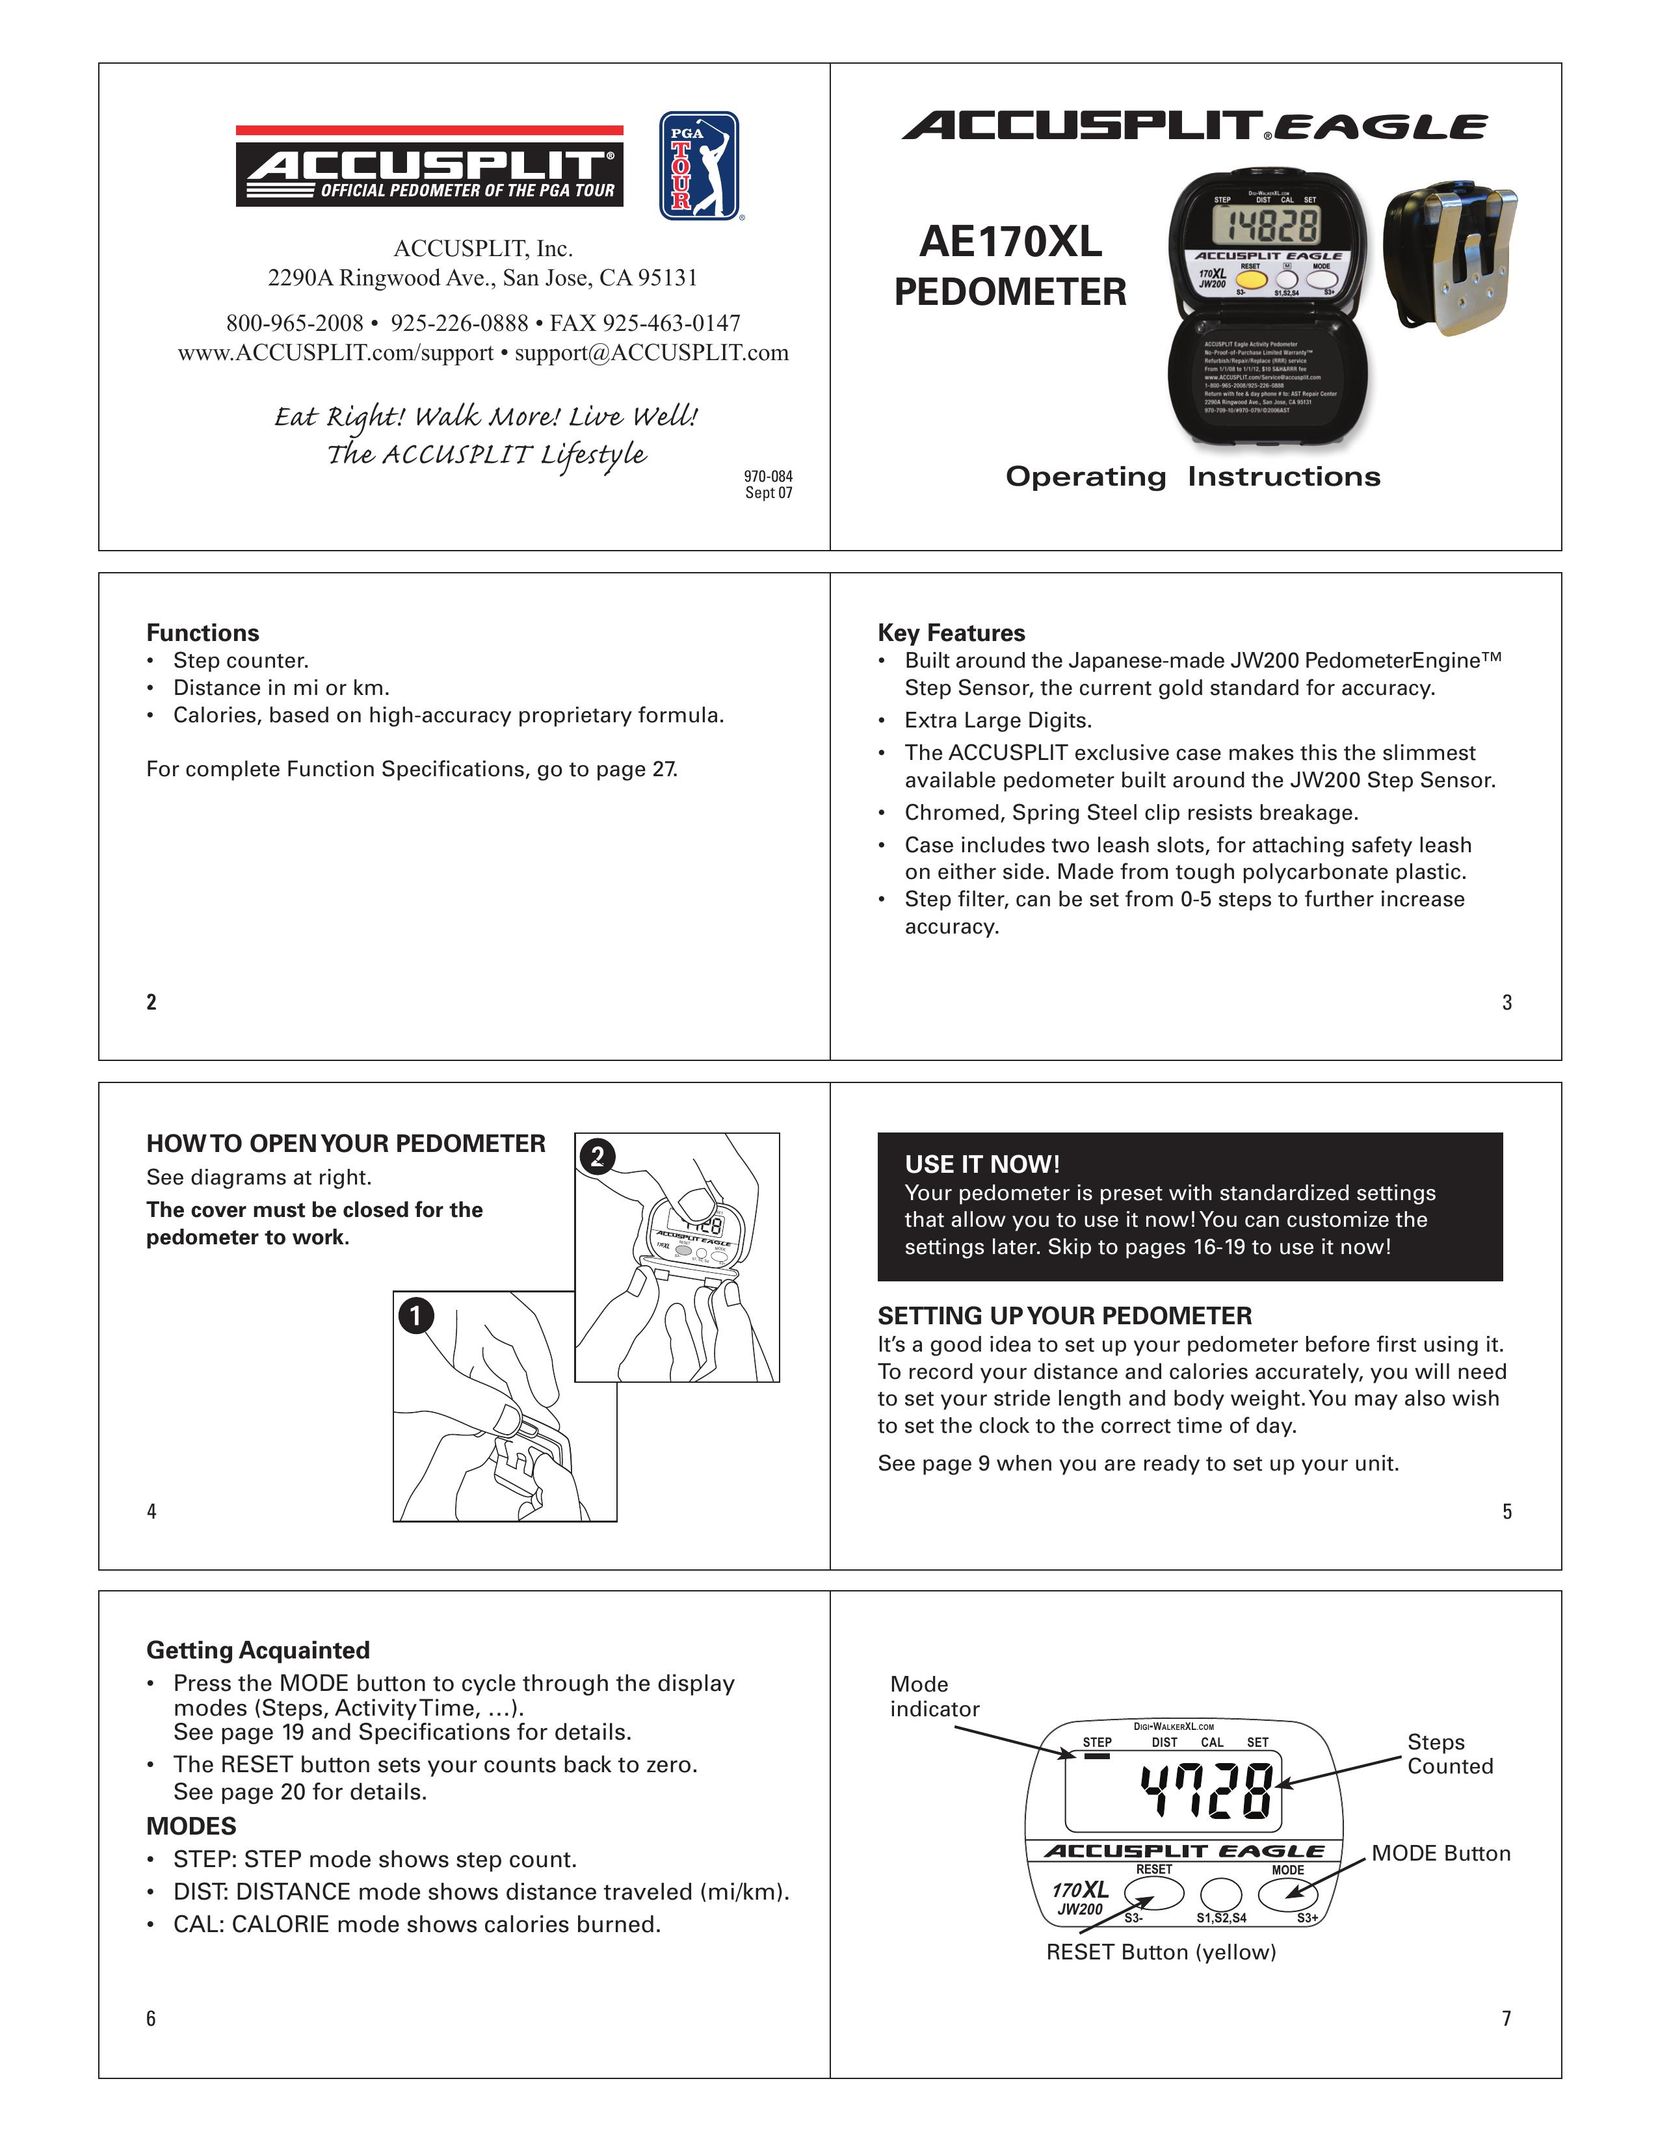 Accusplit AE170XL Fitness Electronics User Manual